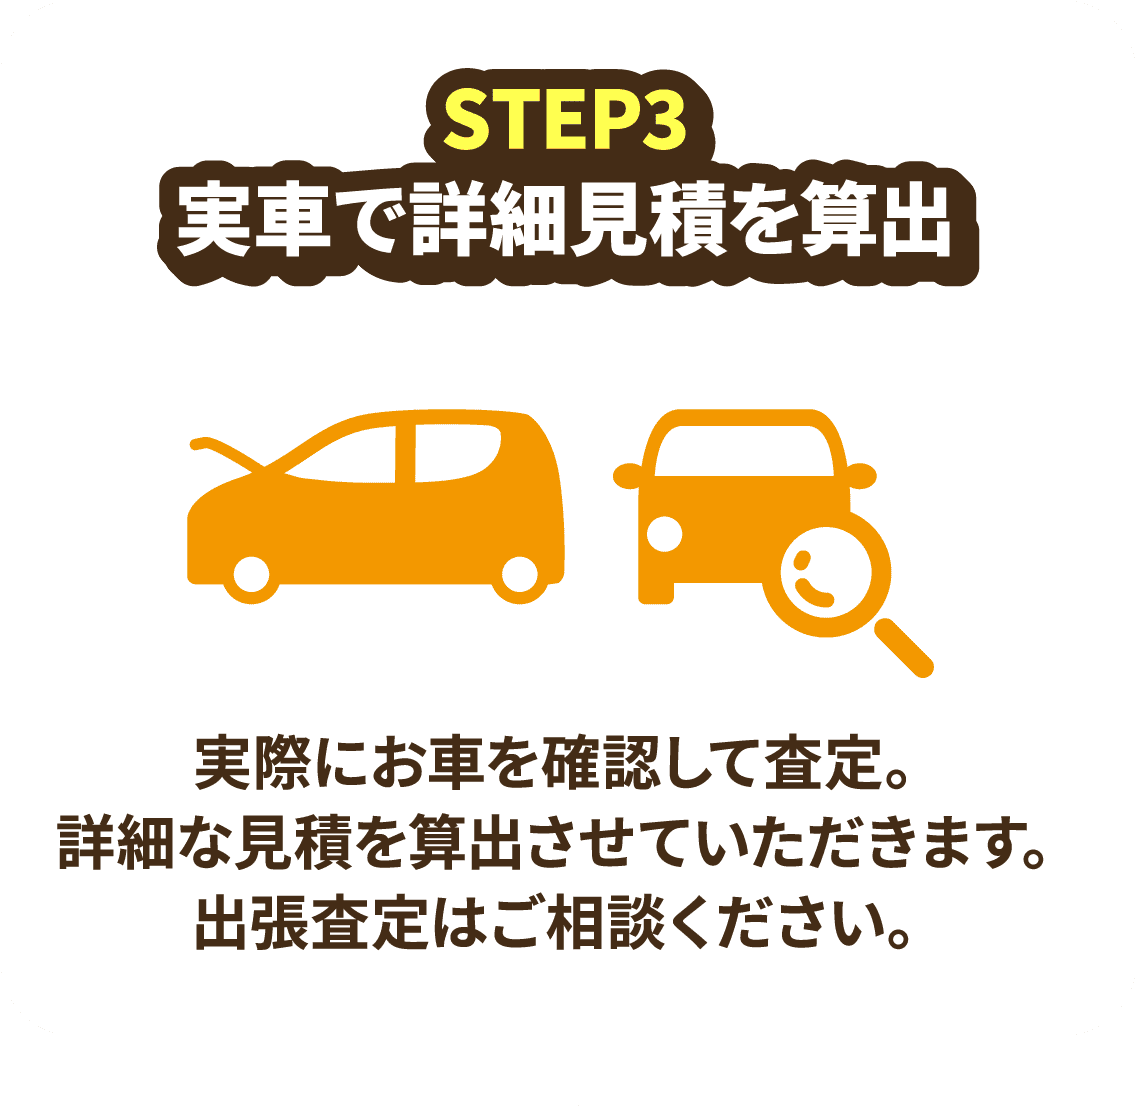 STEP3 実車で詳細見積を算出 実際にお車を確認して査定。詳細な見積を算出させていただきます。出張査定はご相談ください。